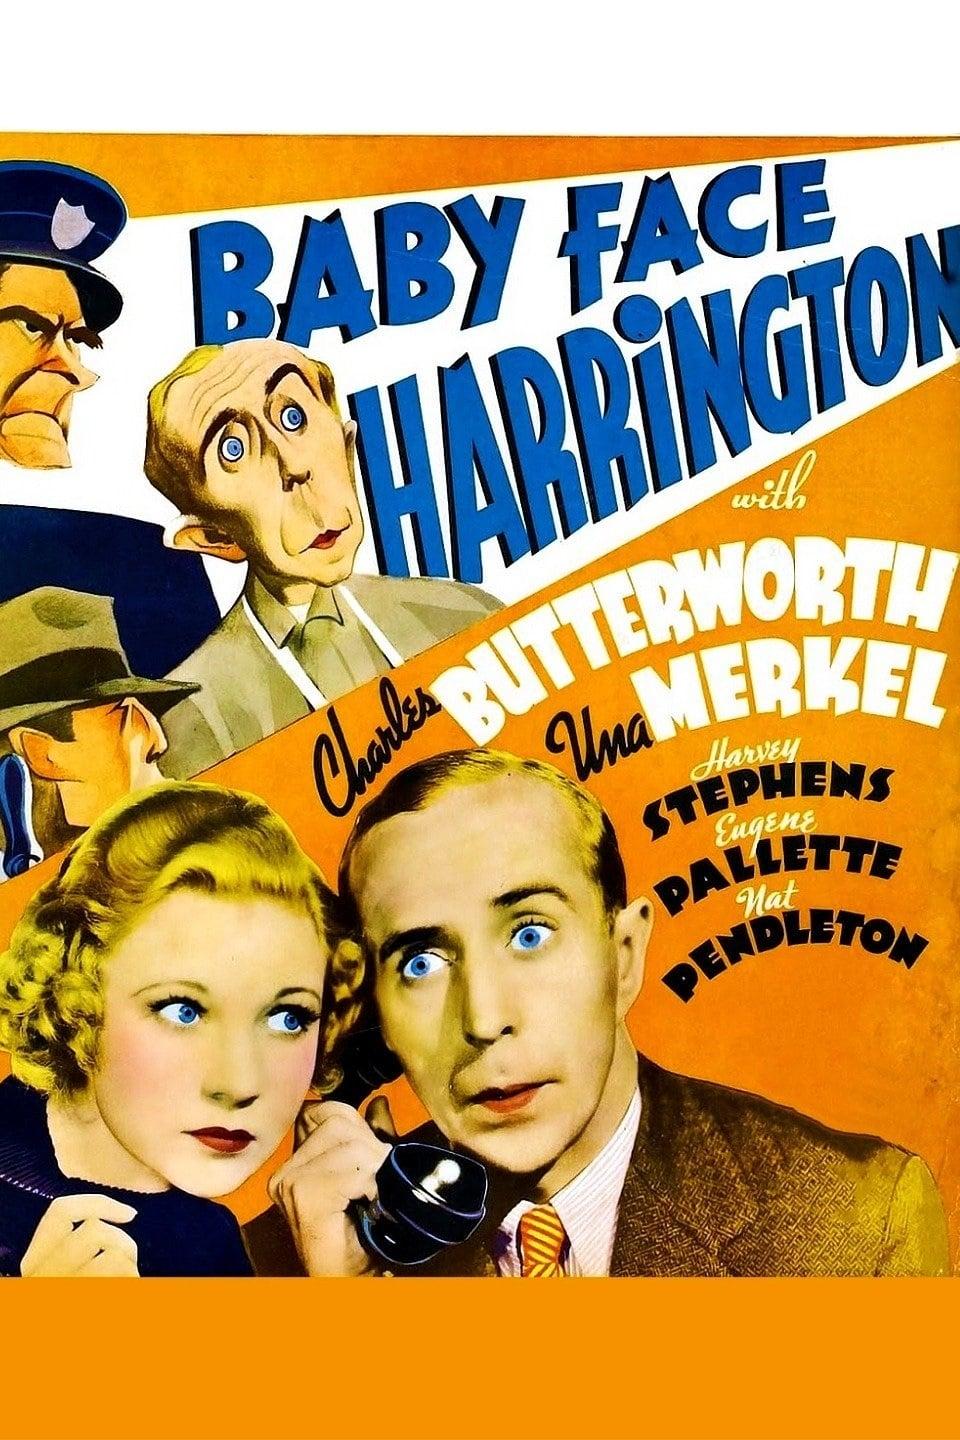 Baby Face Harrington poster